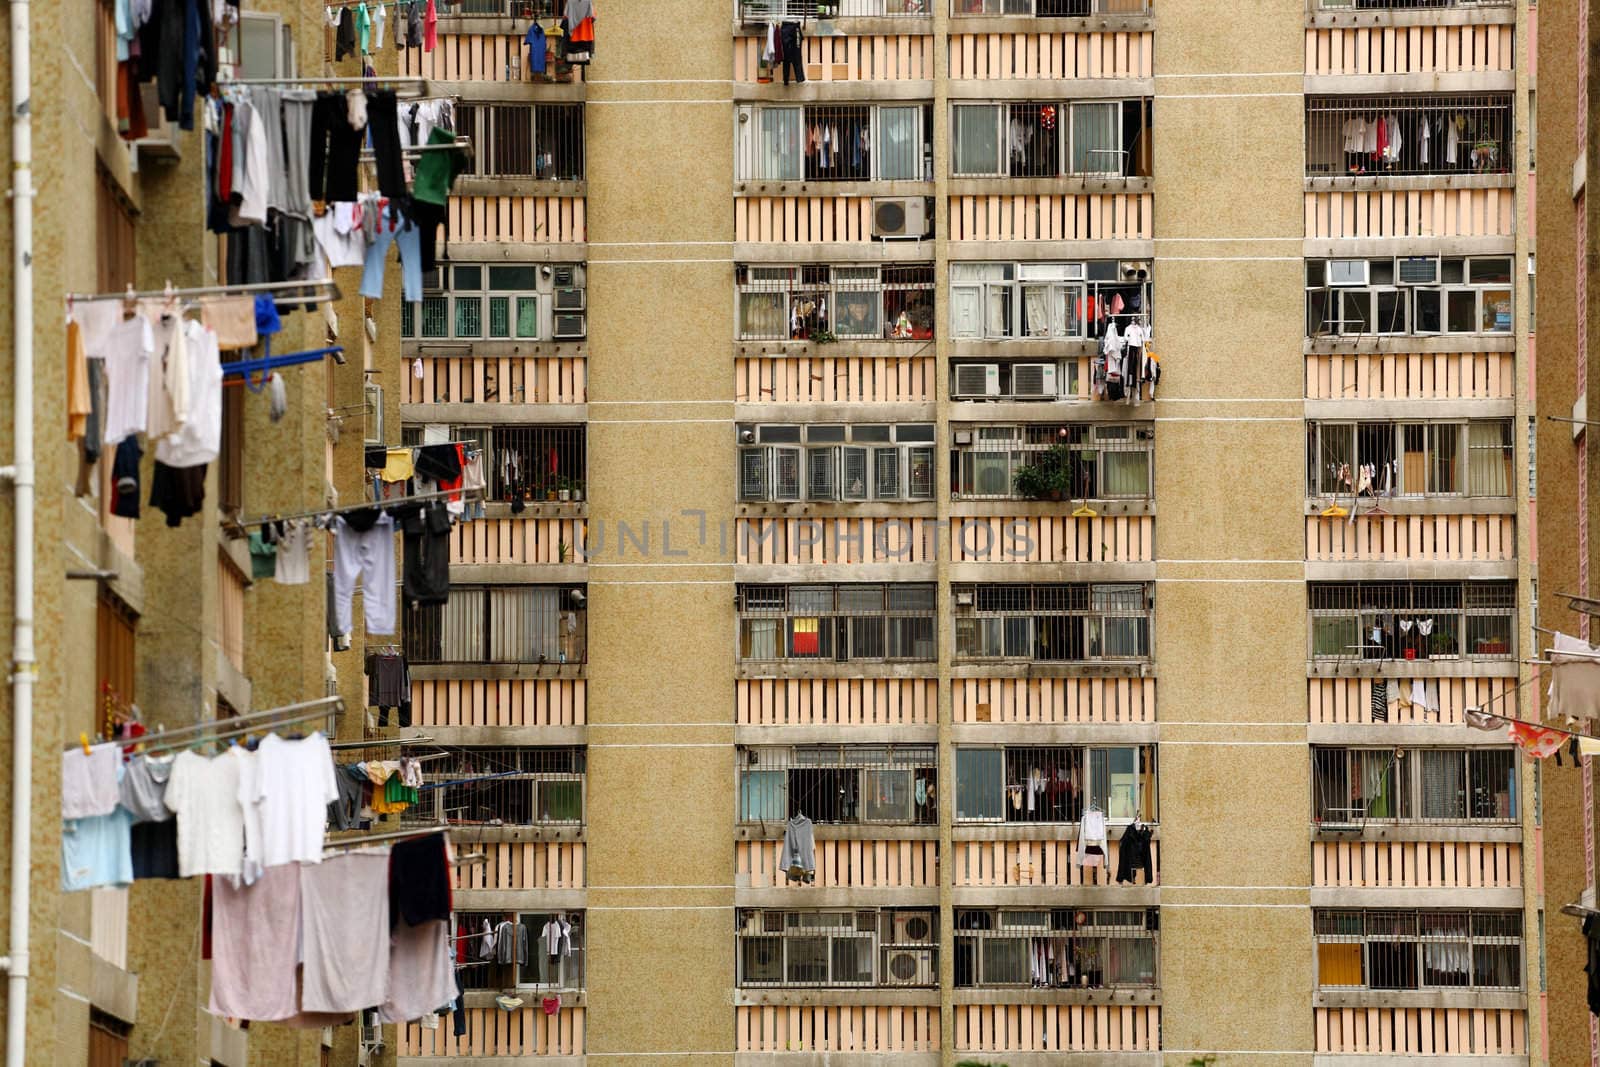 public apartment block in Hong Kong, China by leungchopan